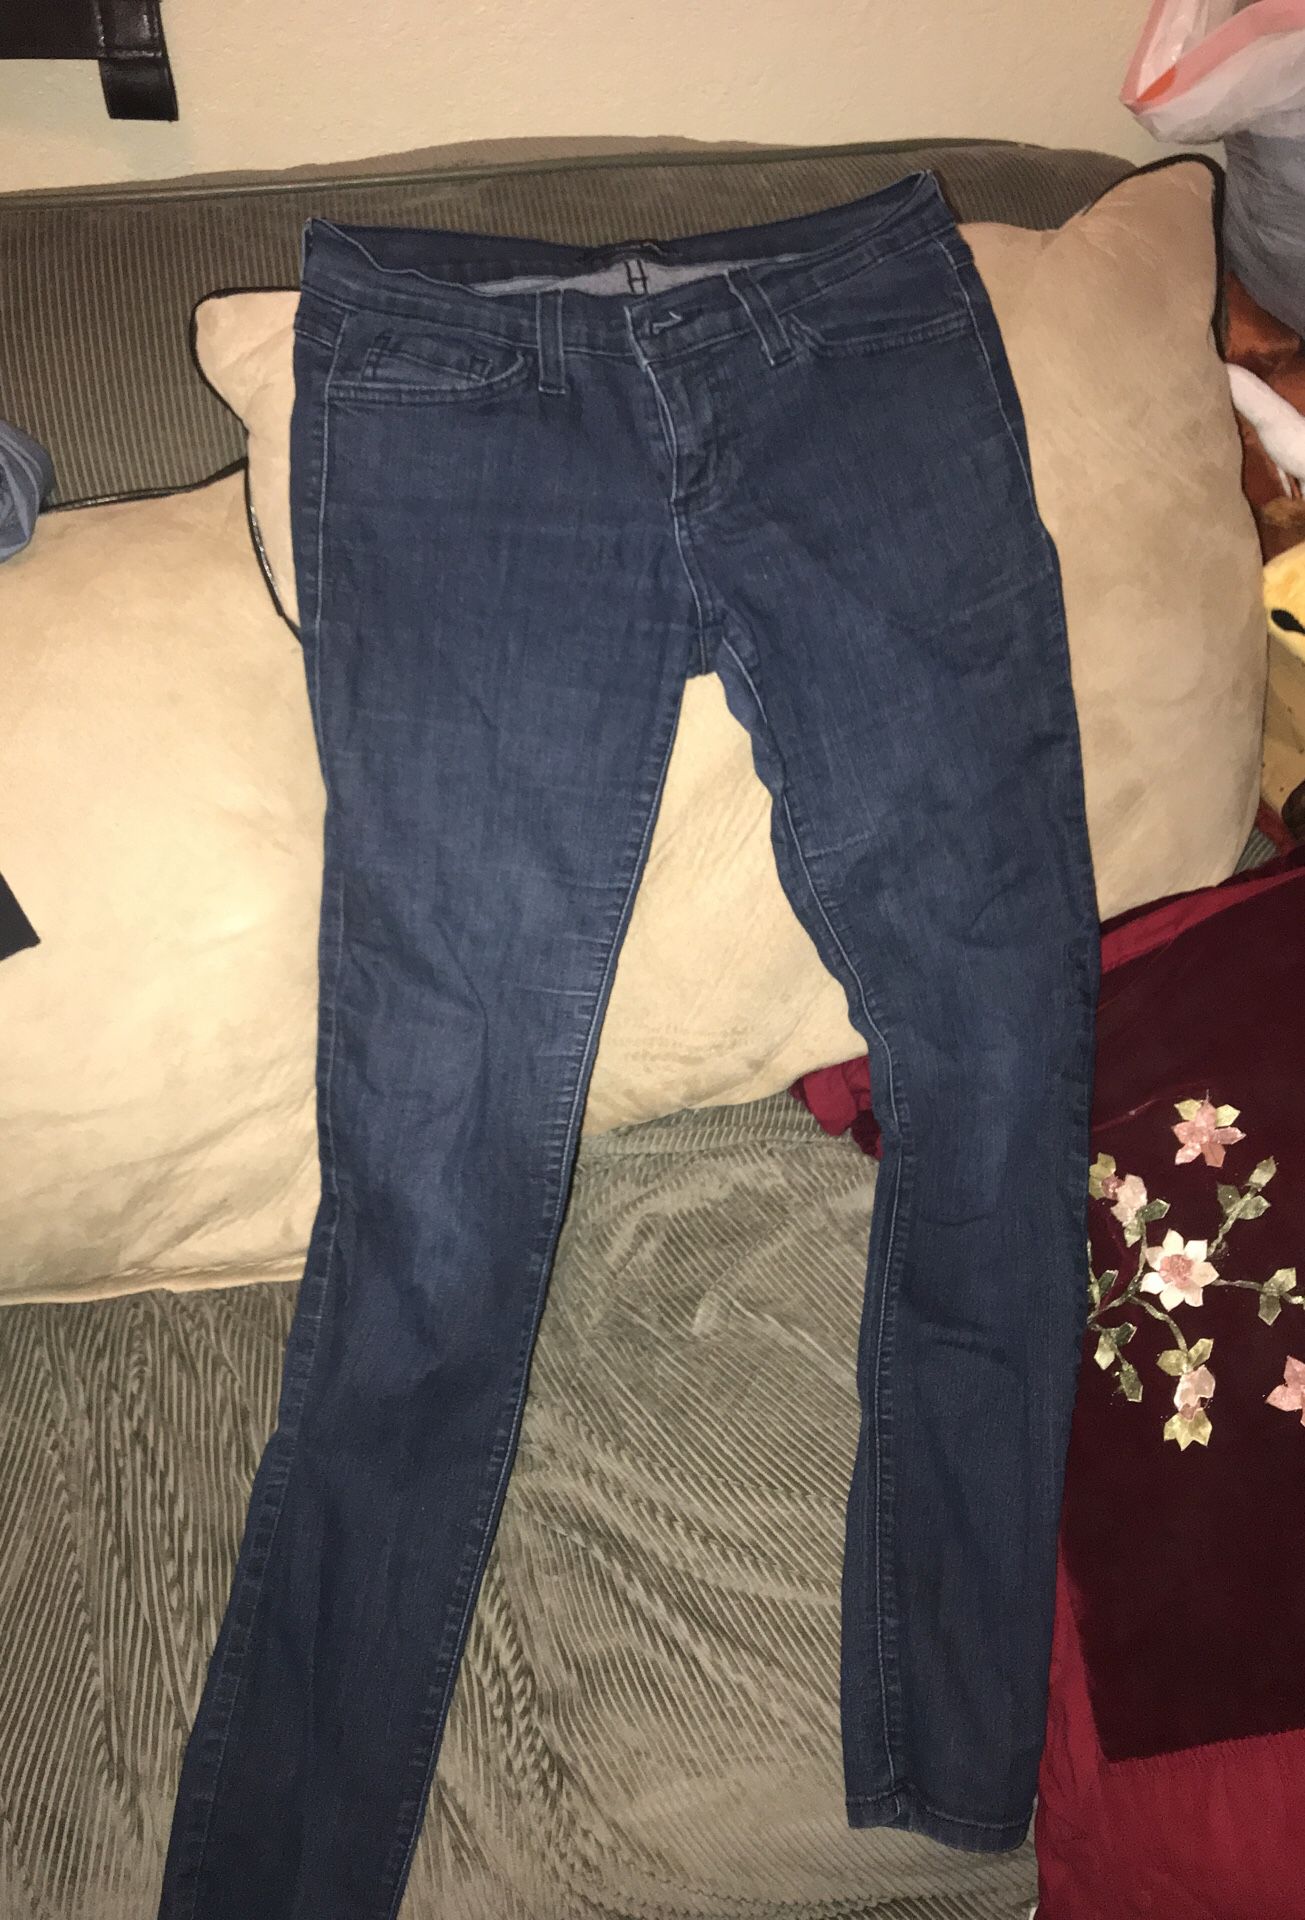 Size 7 Jeans